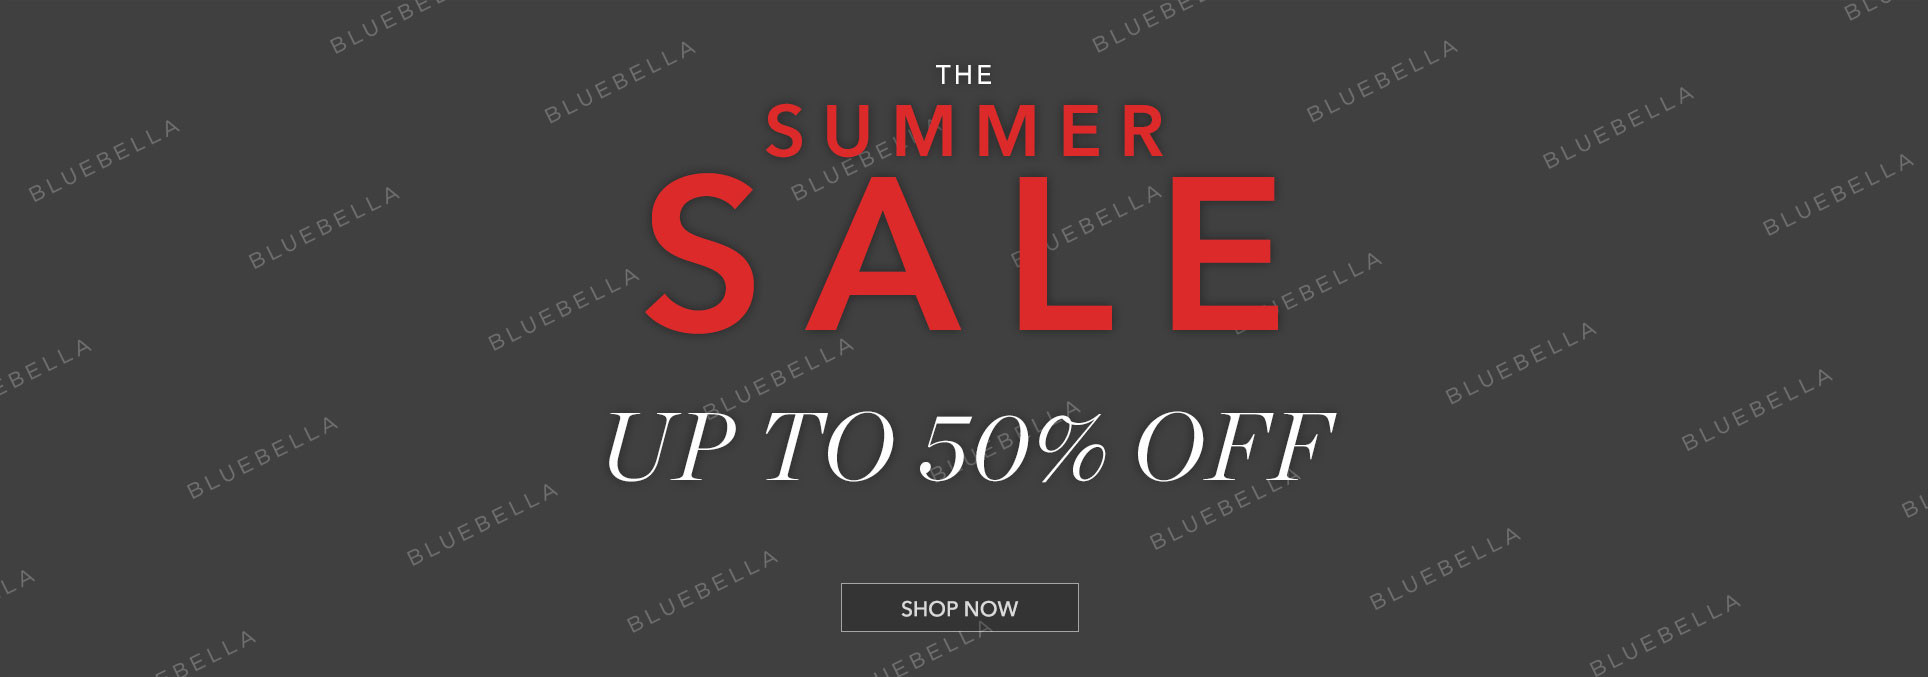 Bluebella Bluebella: Summer Sale up to 50% off nighwear and lingerie